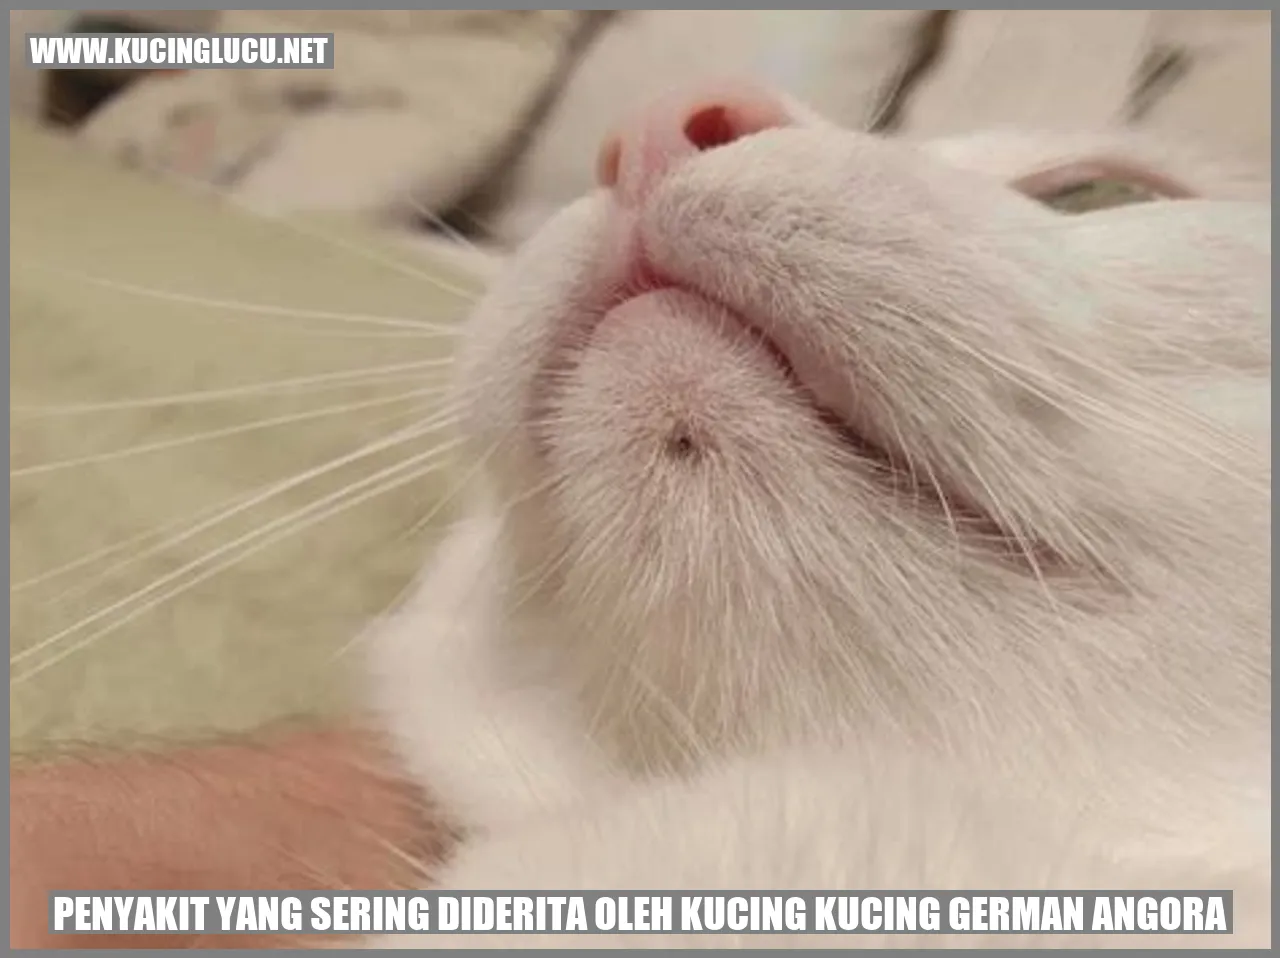 Penyakit yang Sering Diderita oleh Kucing German Angora